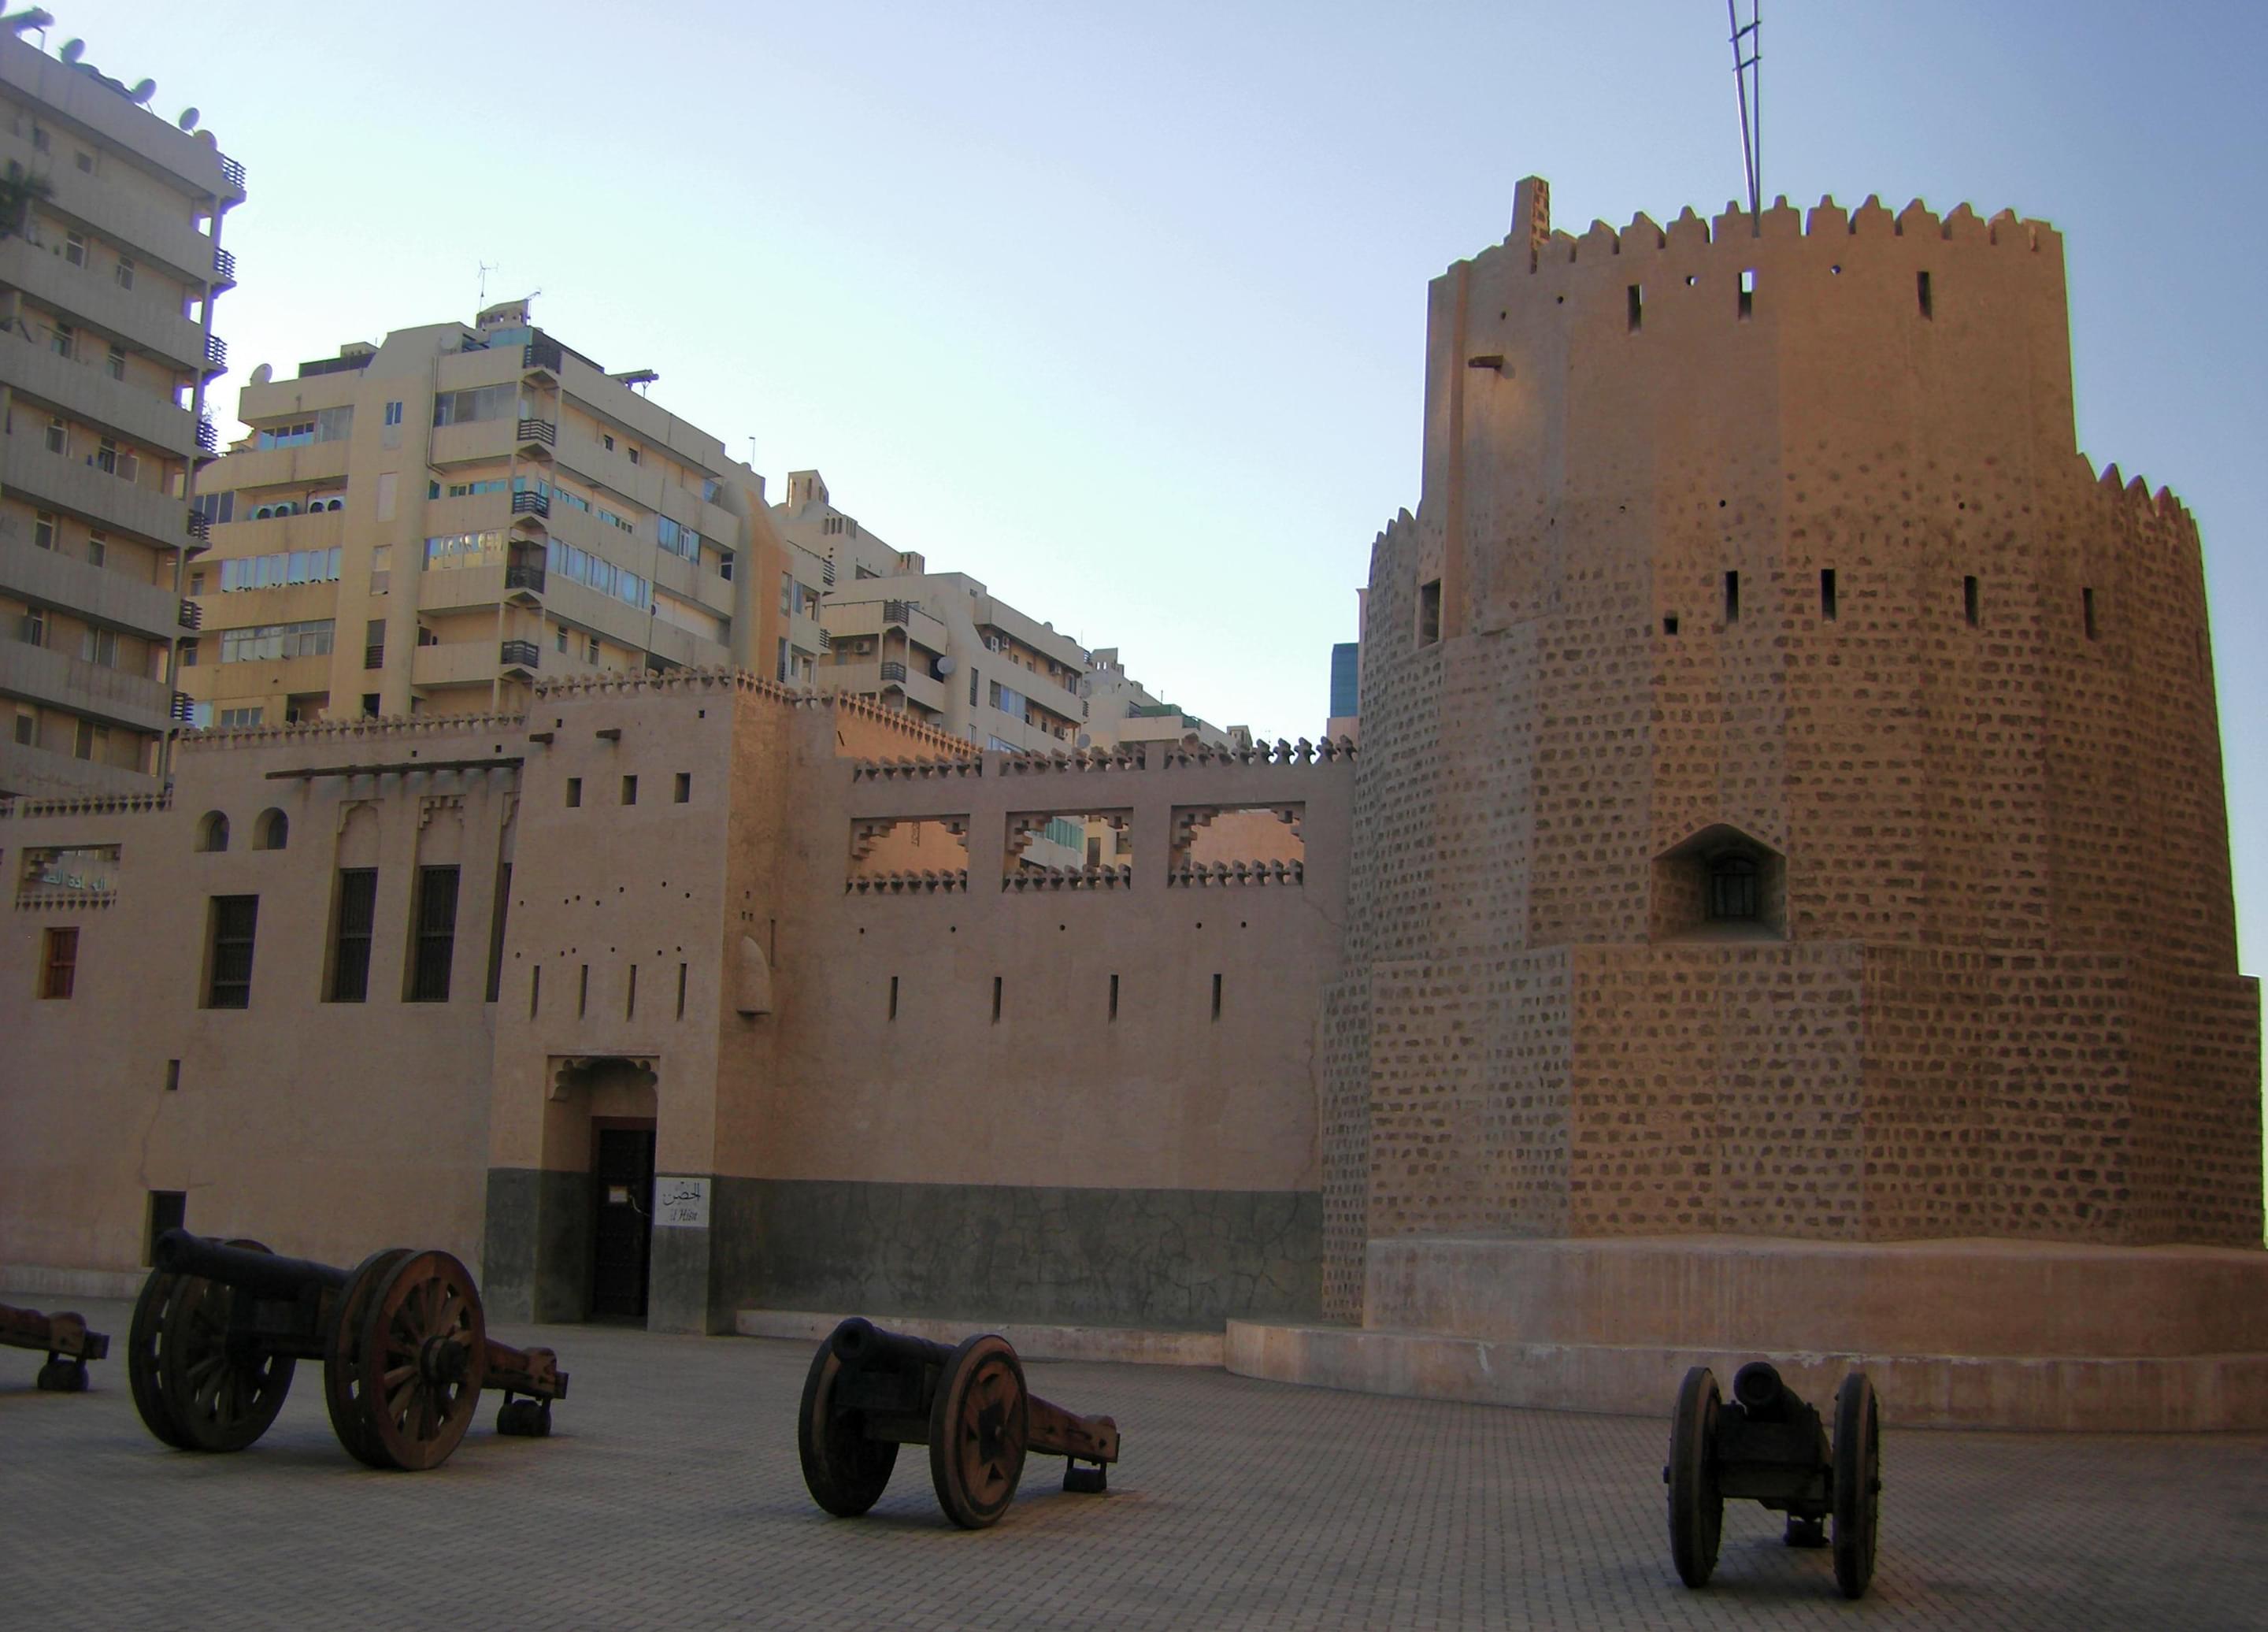 Sharjah Fort Overview